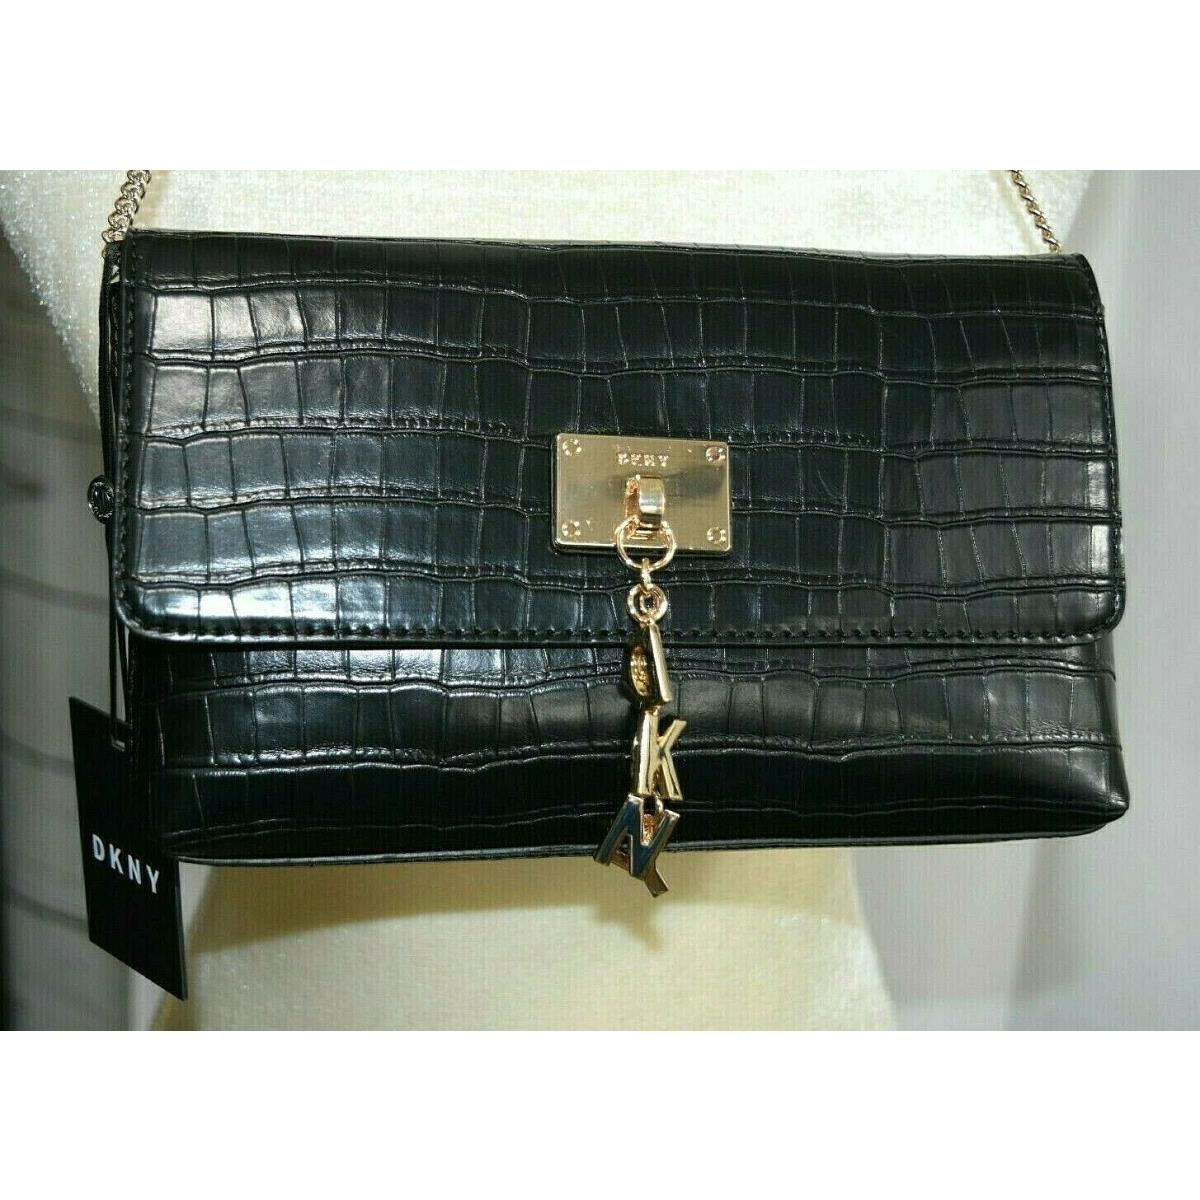 Dkny Cleo Clutch Bag Black Croc Chain Shoulder Handbag Purse